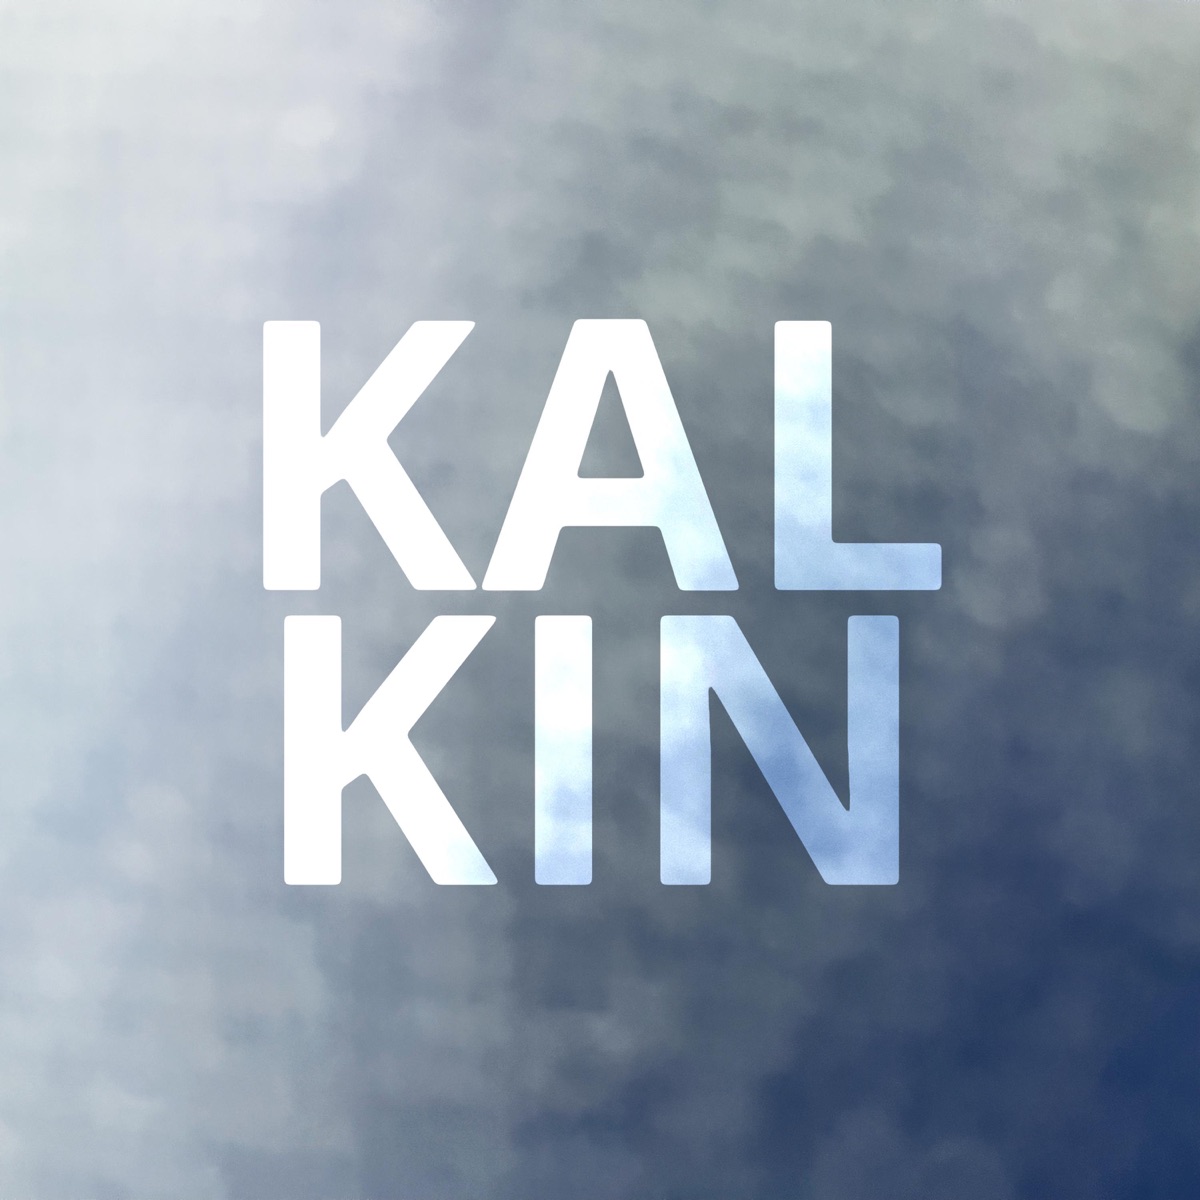 Kiri (Ergo Proxy Op) - Single - Album by Kal - Apple Music